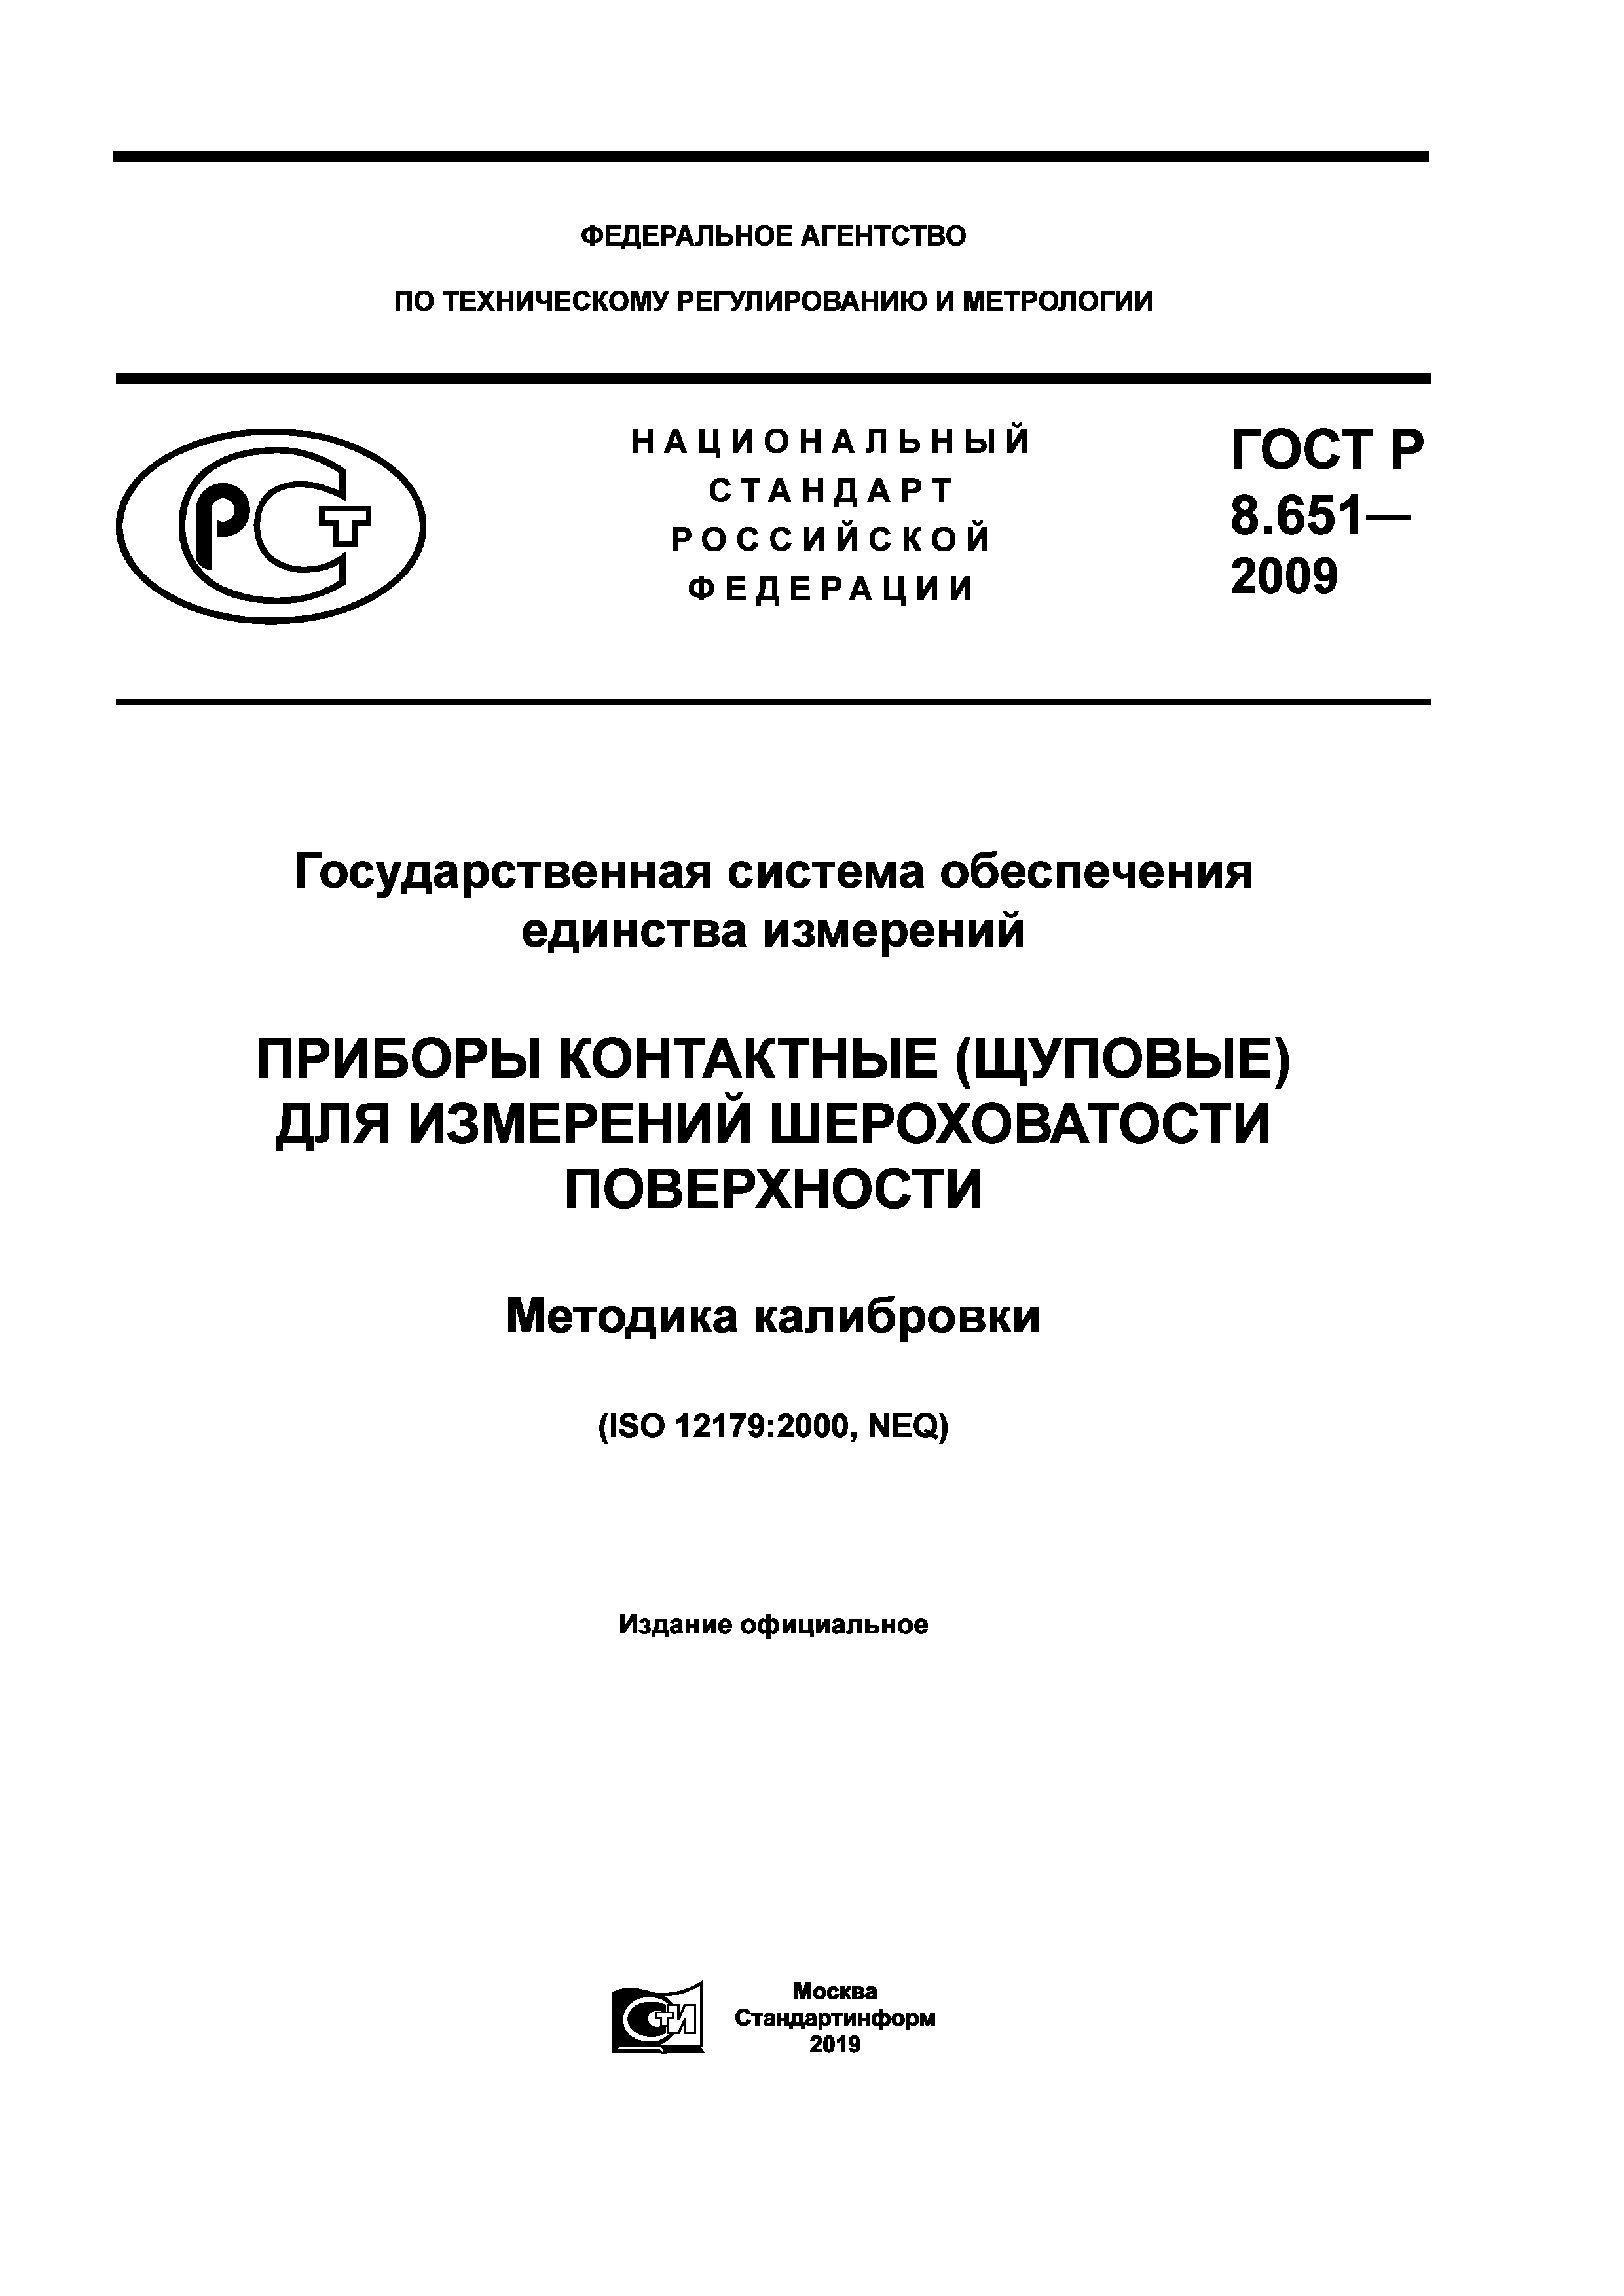 ГОСТ Р 8.651-2009